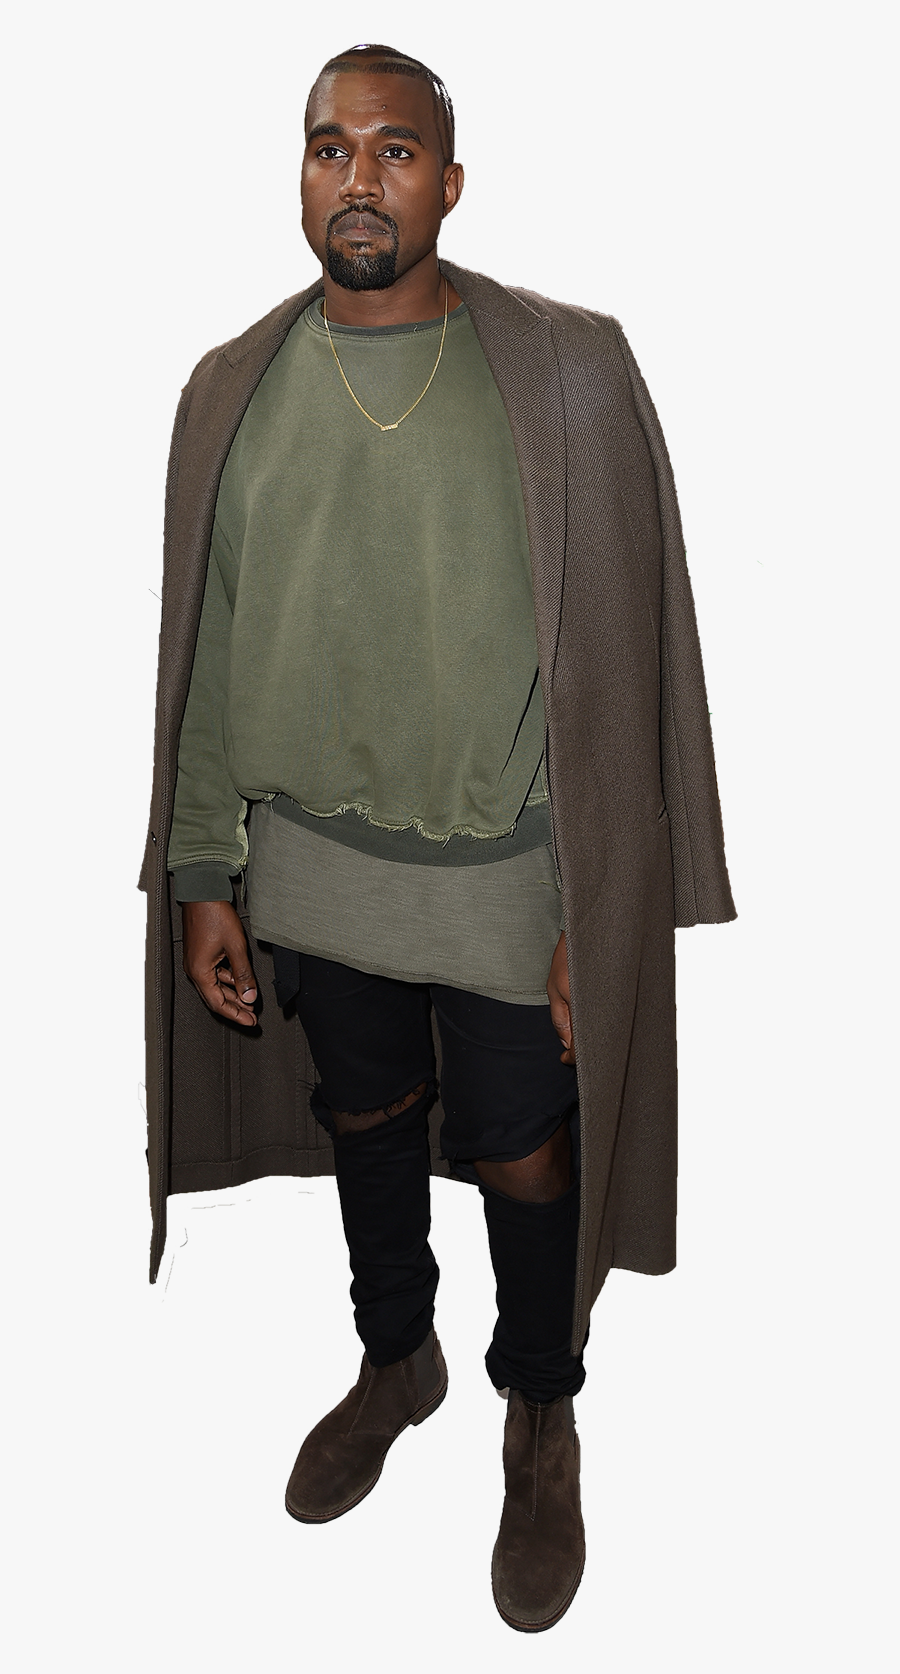 Kanye West Clip Art, Transparent Clipart